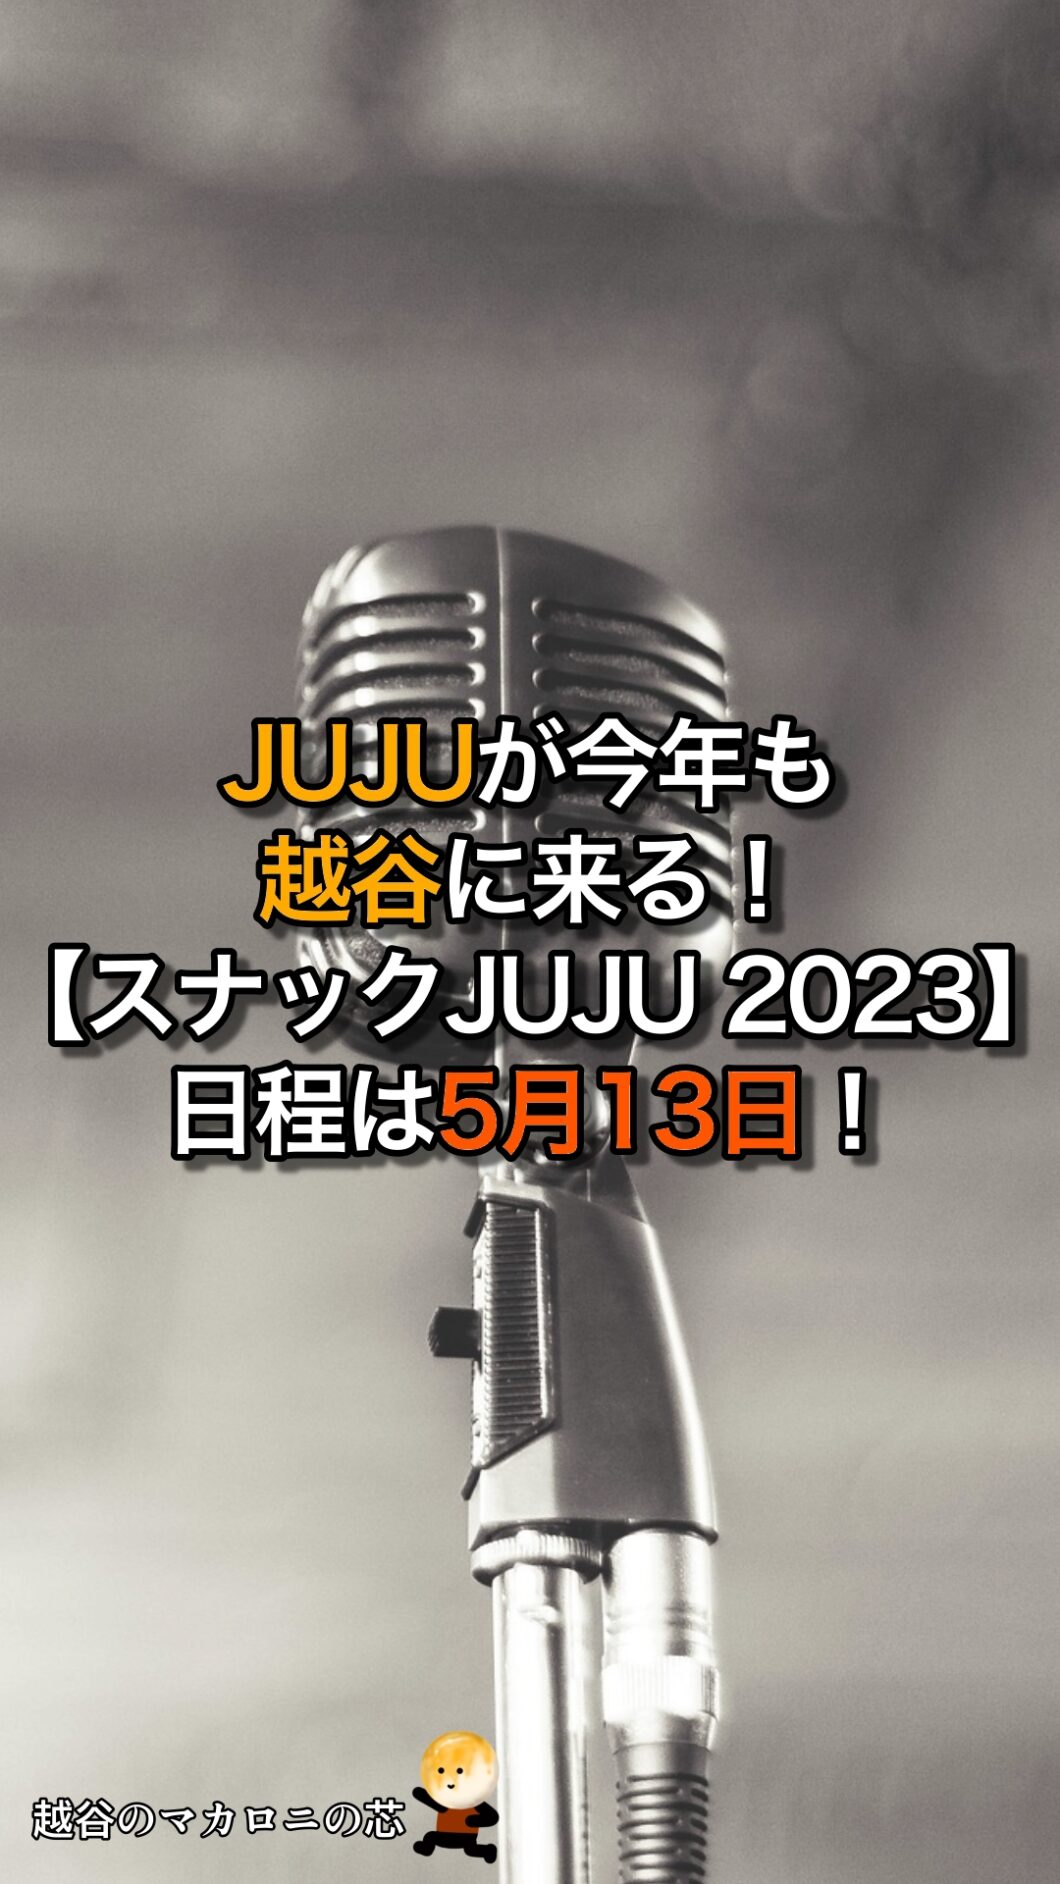 JUJUが今年も越谷に来る！【スナックJUJU 2023】日程は5月13日！